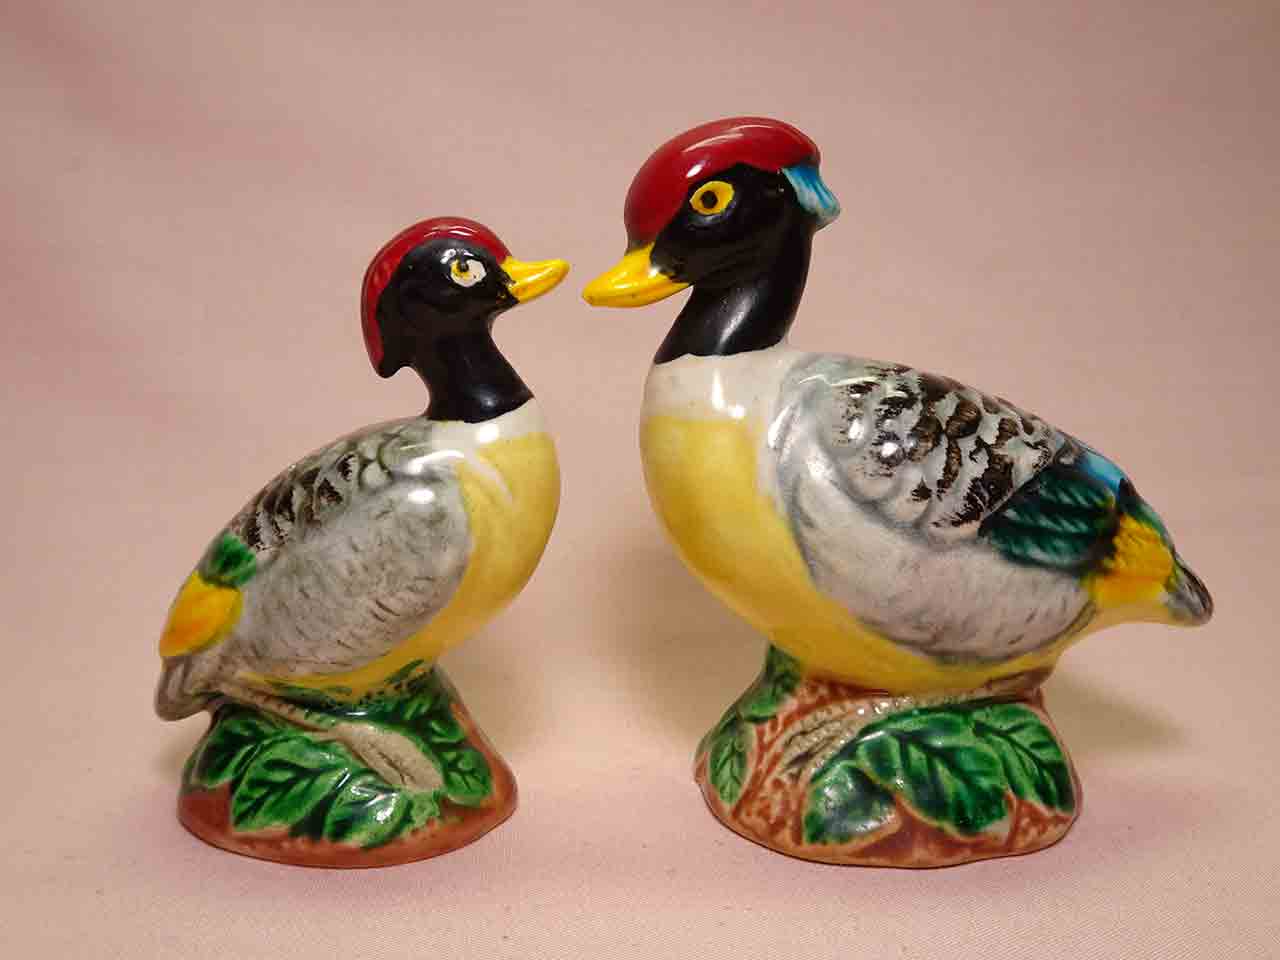 Vintage Made in Japan birds salt and pepper shakers - Ducks